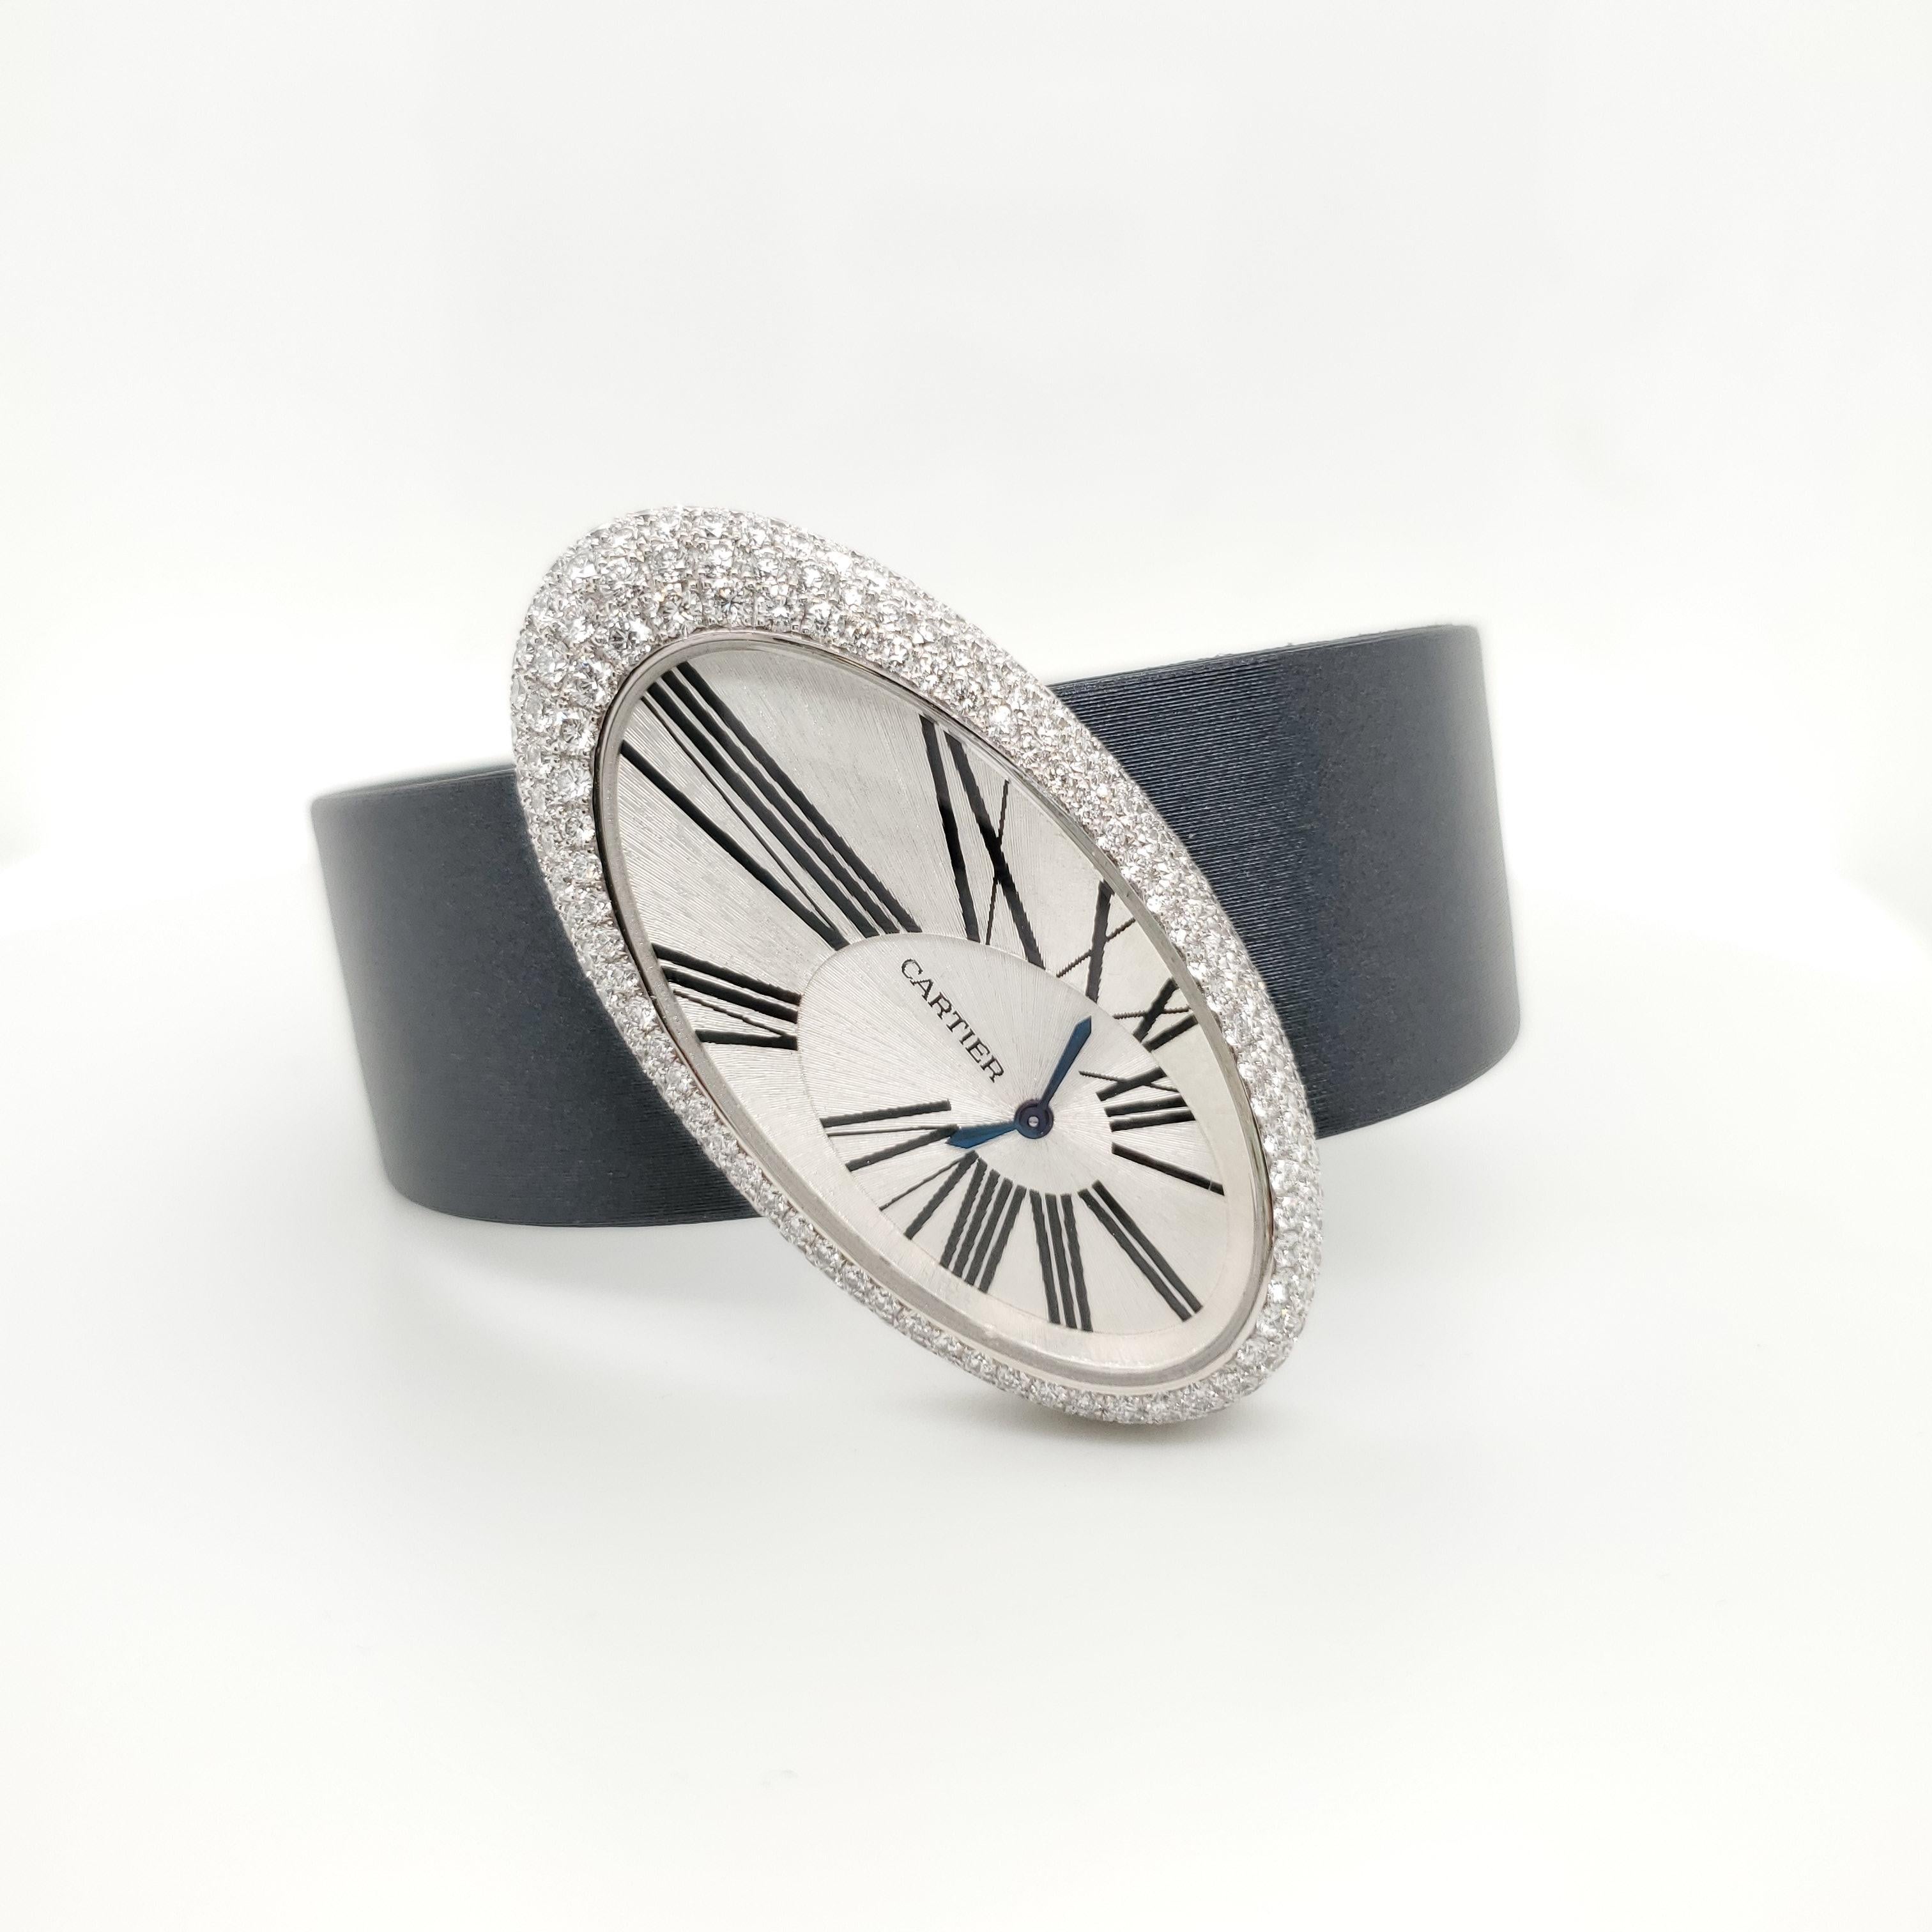 Round Cut Cartier Baignoire Hypnose Diamond Ladies Watch on Satin Strap